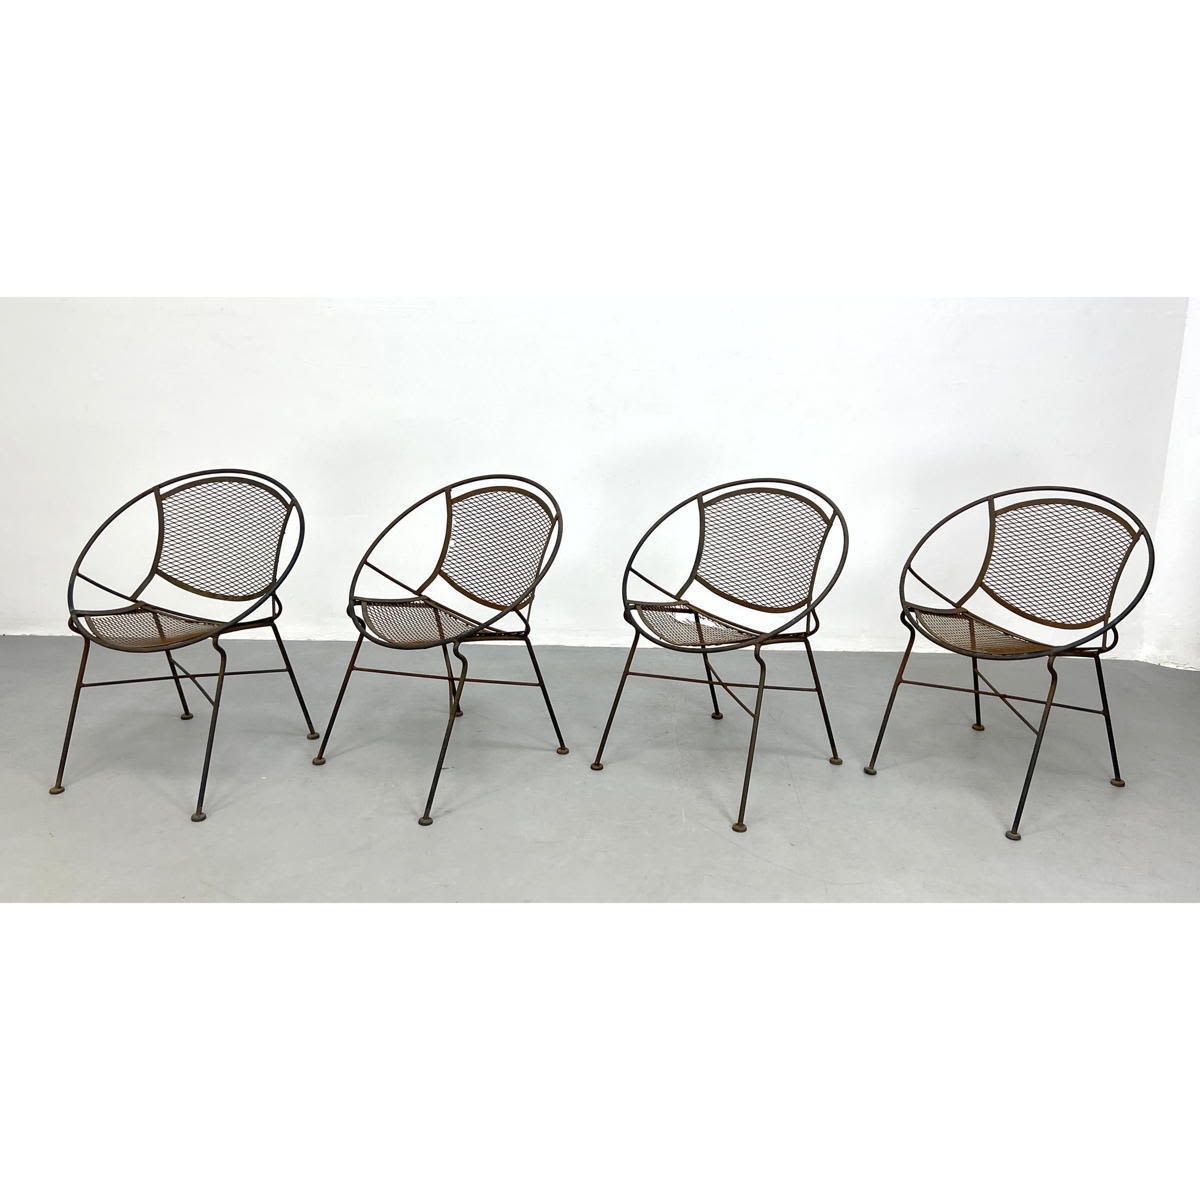 Set 4 Salterini Radar chairs. 

Dimensions: